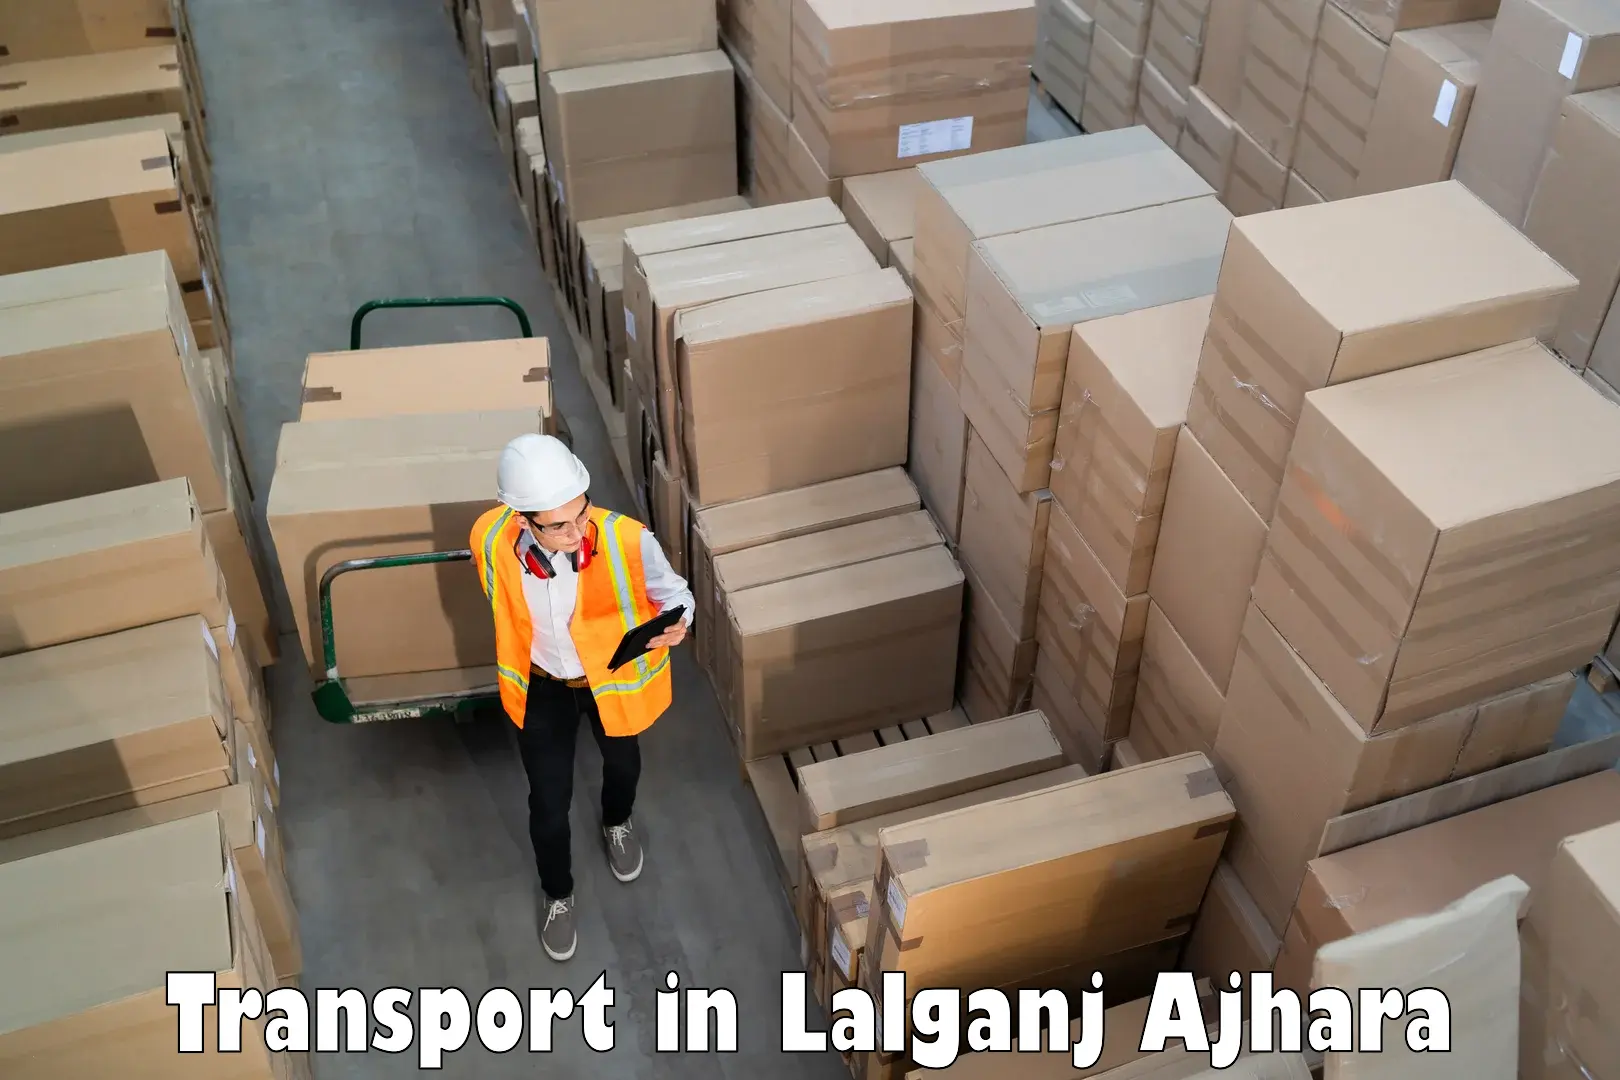 Truck transport companies in India in Lalganj Ajhara